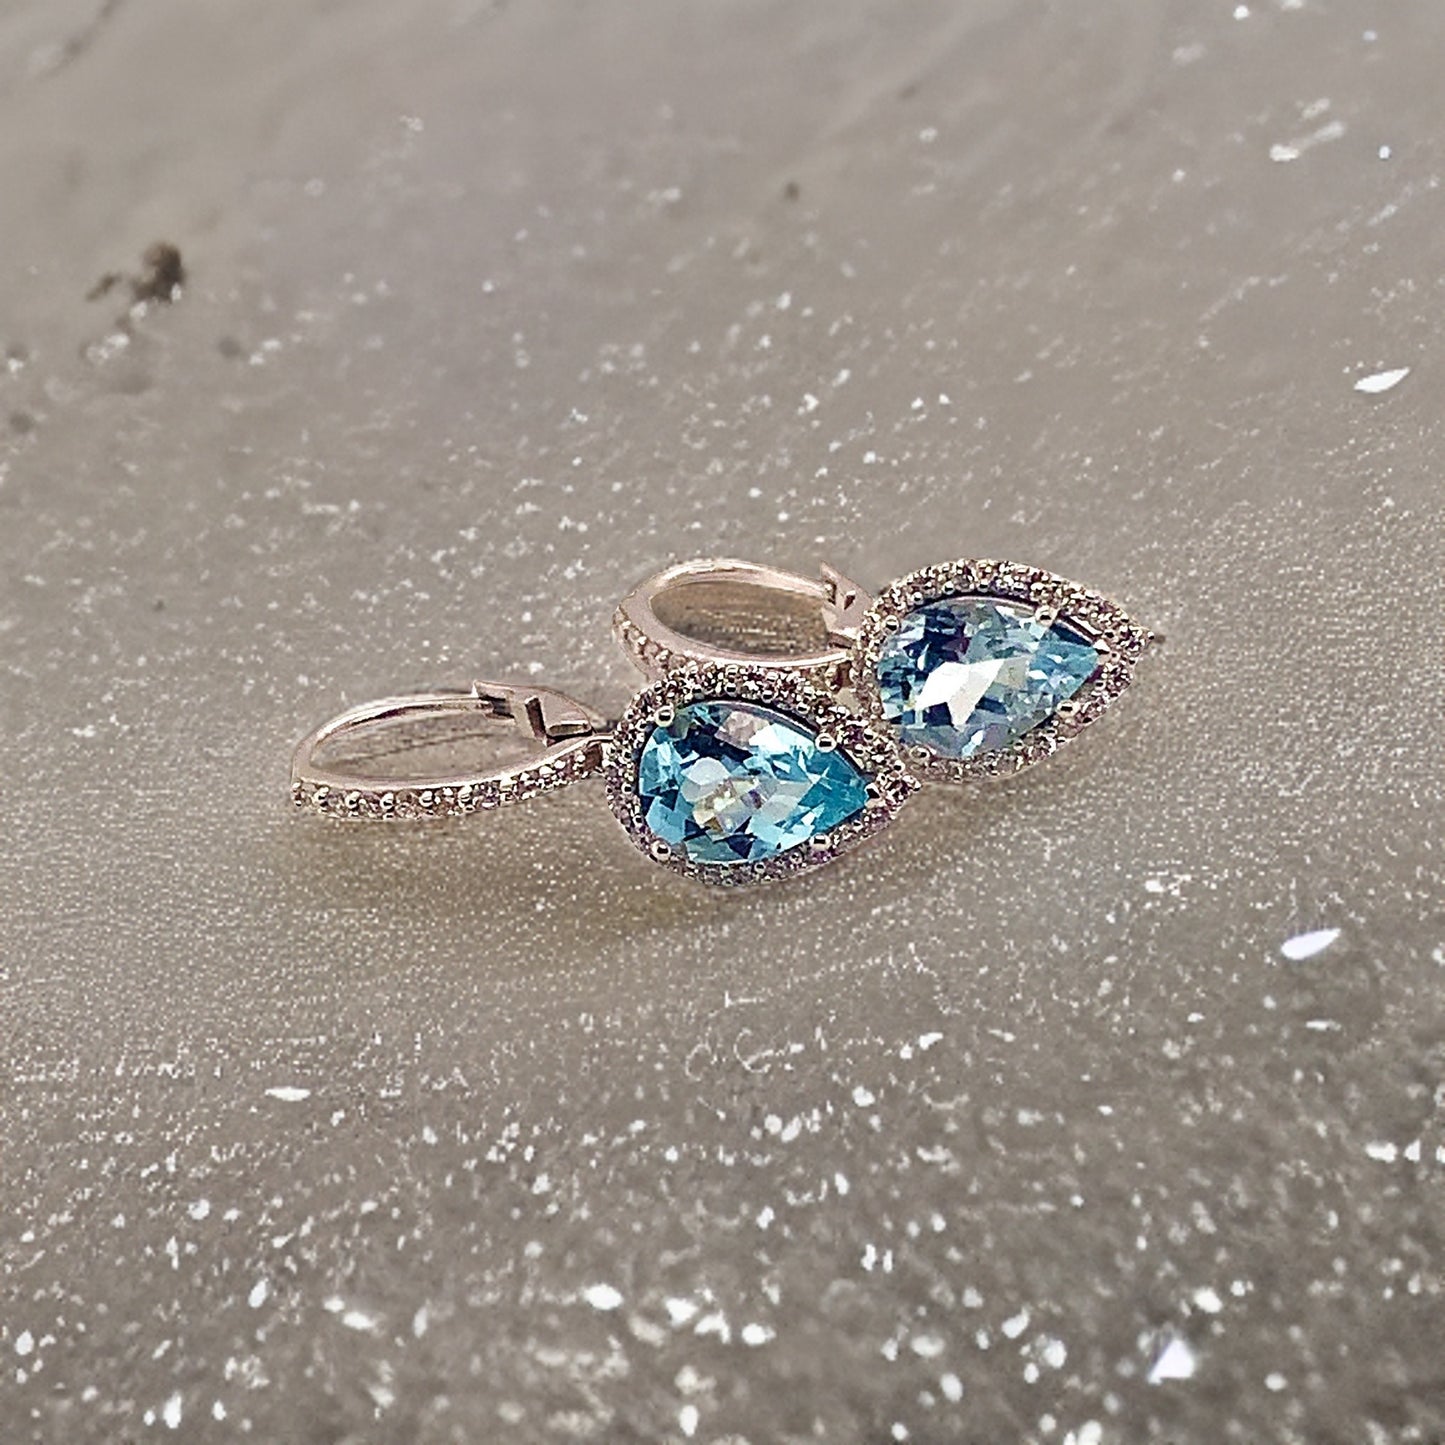 Natural Aquamarine Diamond Earrings 14k Gold 3.61 TCW Certified $5,950 118916 - Certified Fine Jewelry